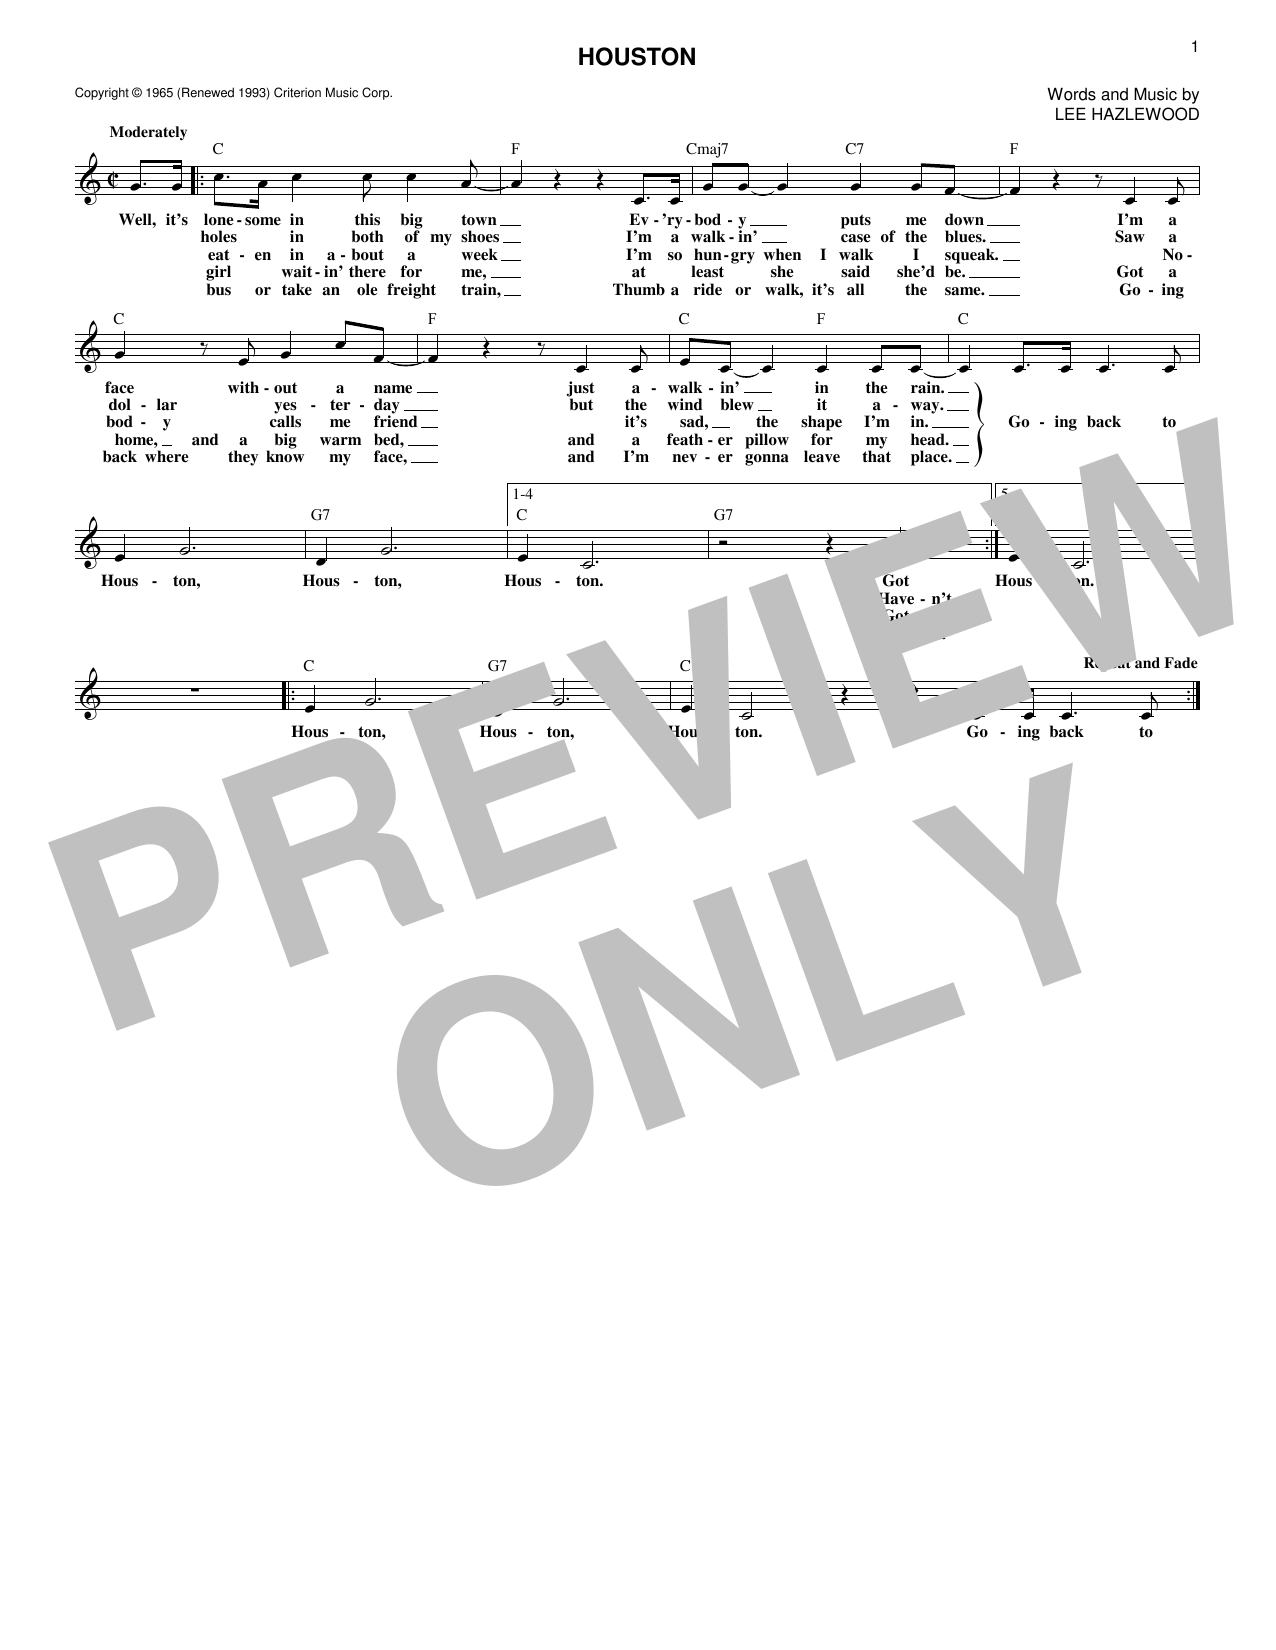 Lee Hazlewood Houston Sheet Music Notes & Chords for Melody Line, Lyrics & Chords - Download or Print PDF